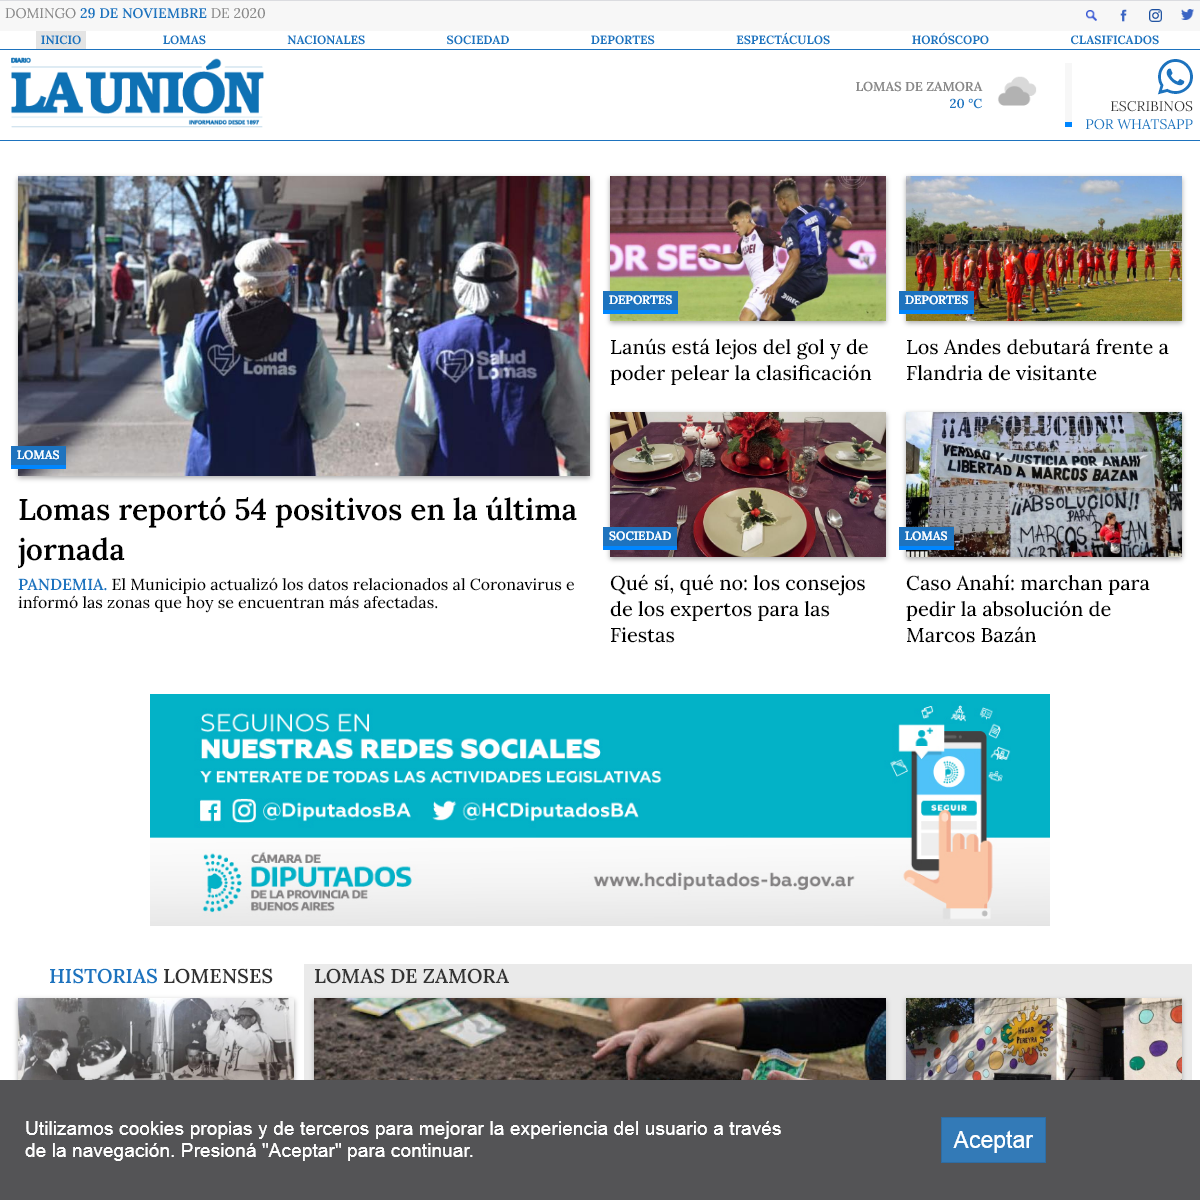 A complete backup of launion.com.ar